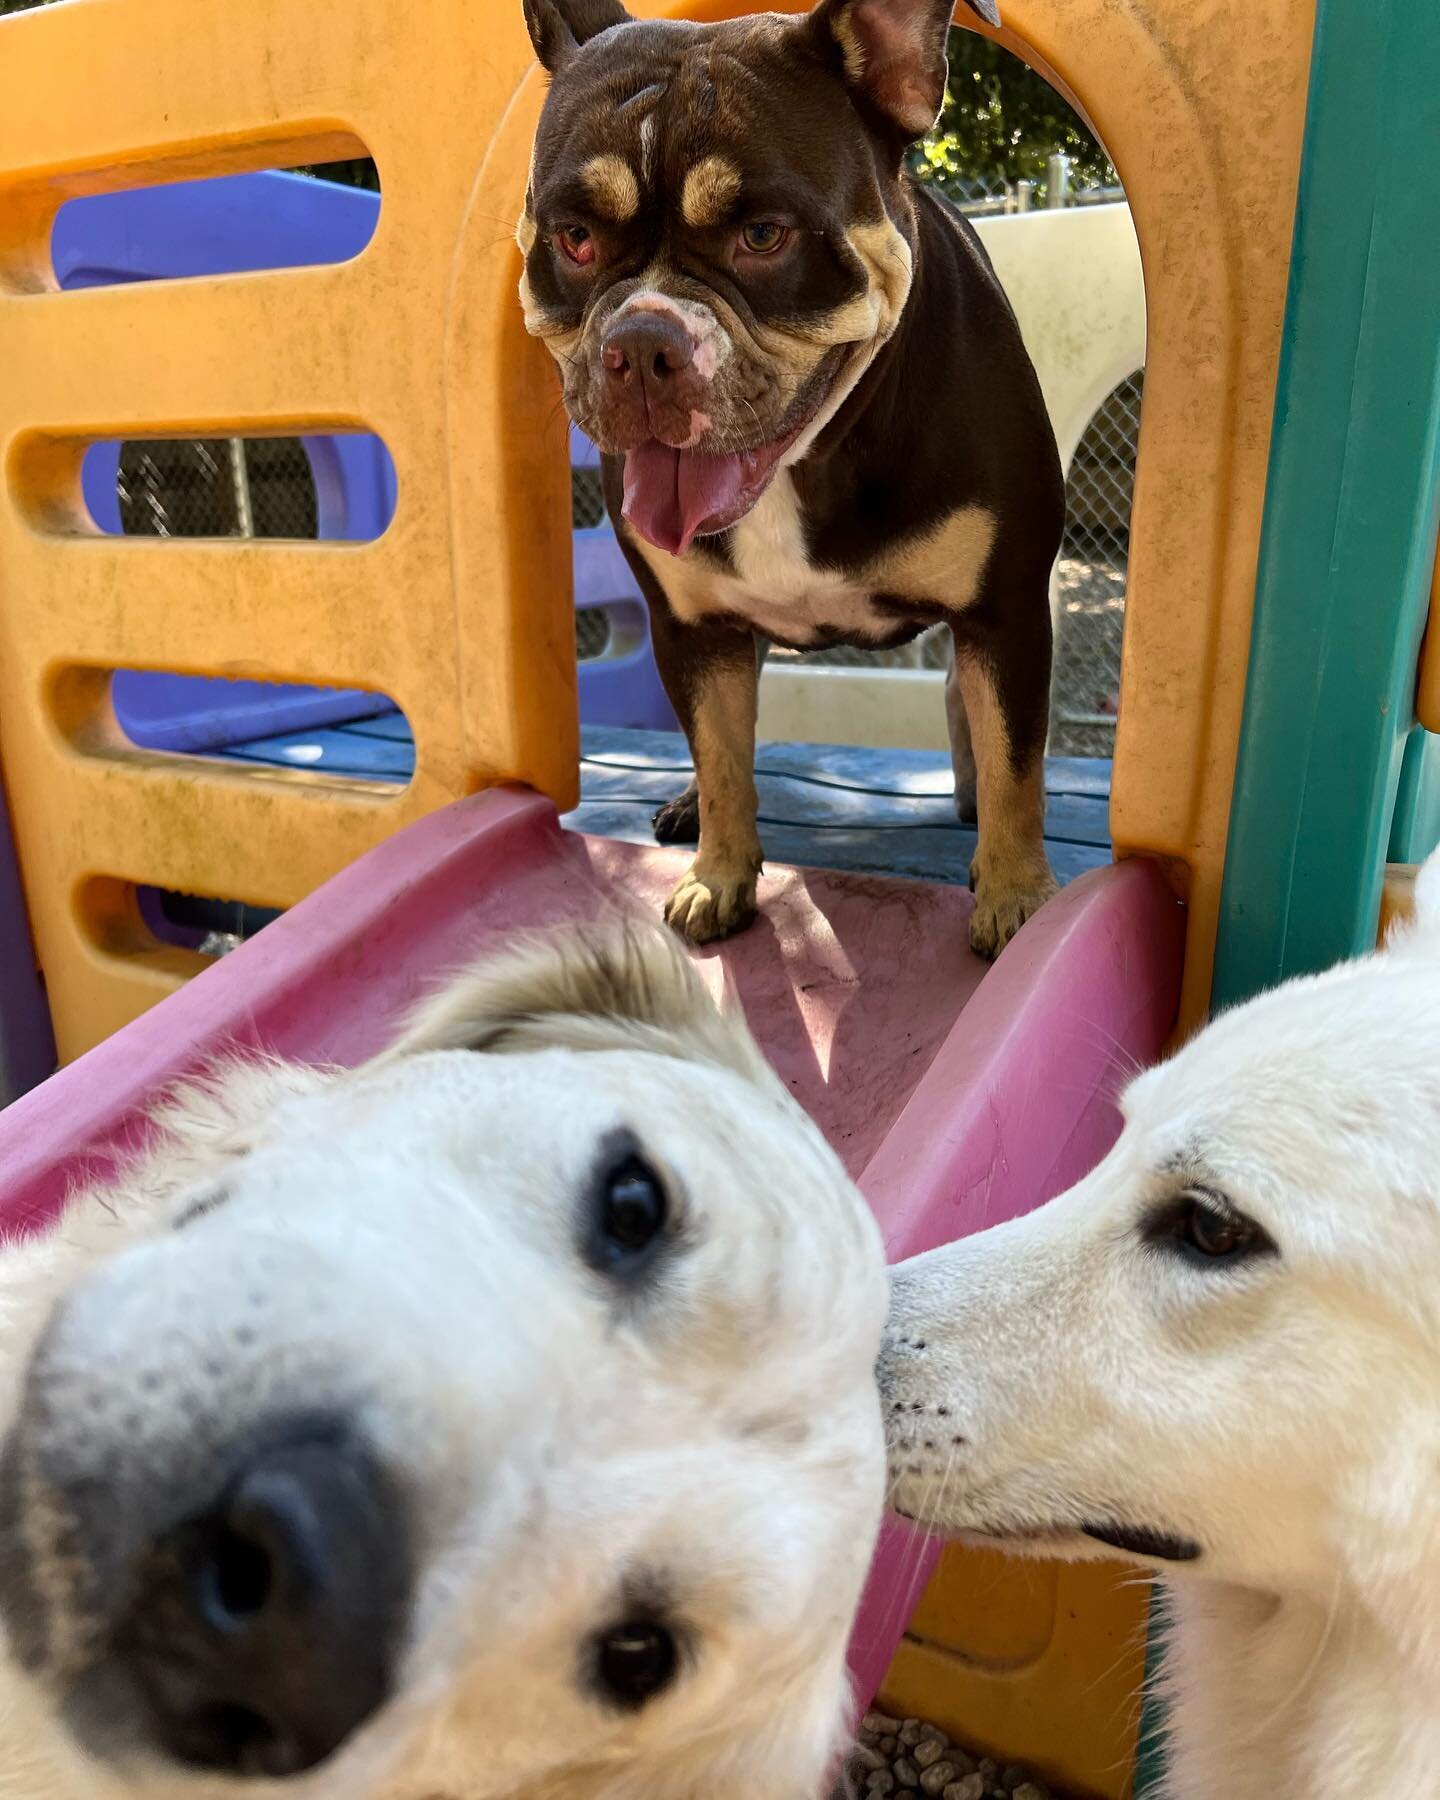 #goofydog #sillydogs #cute #dogs #dogsofinstagram #mustlovedogs #dogslife #doggydaycarelife #happydogs #playhard #besilly #playgroup #funtimes #southshorema #duxburykennel